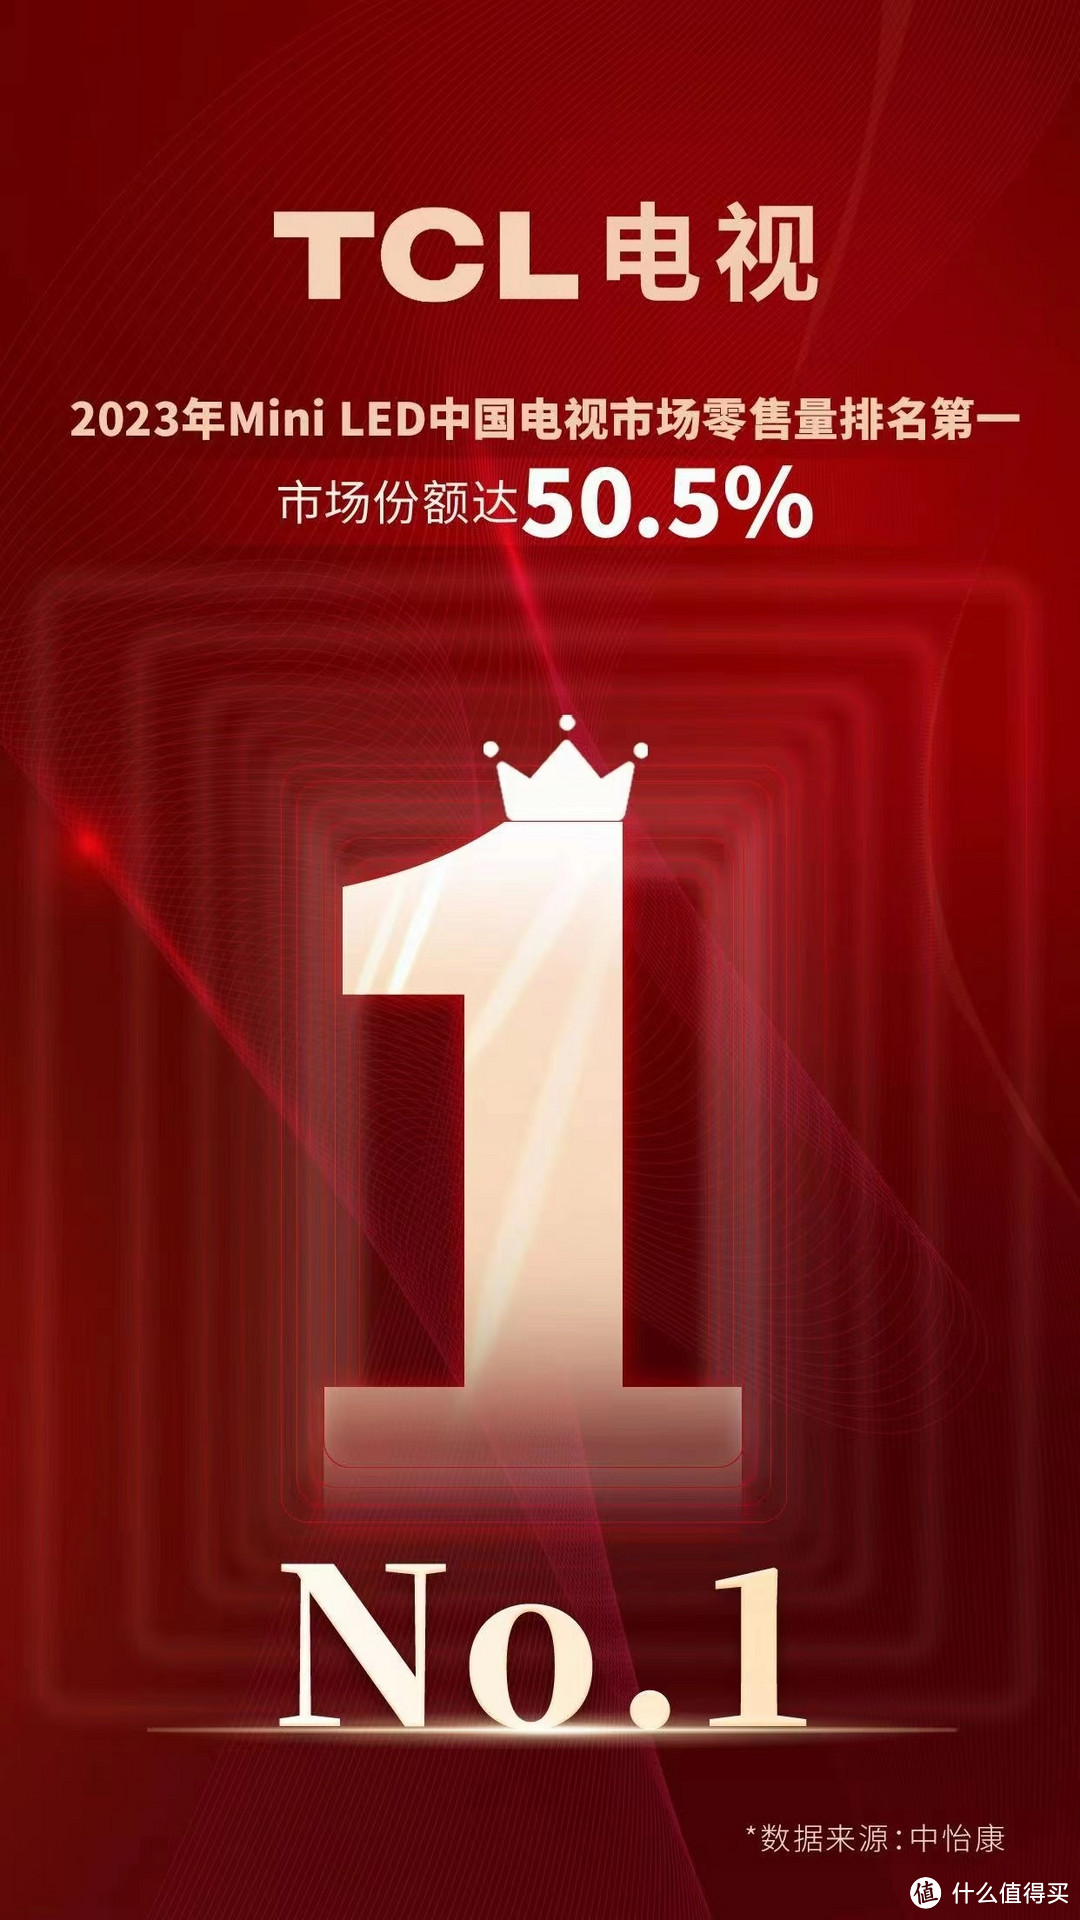 TCL电视再创辉煌！2023年全球销量第二，中国品牌第一！国人骄傲！